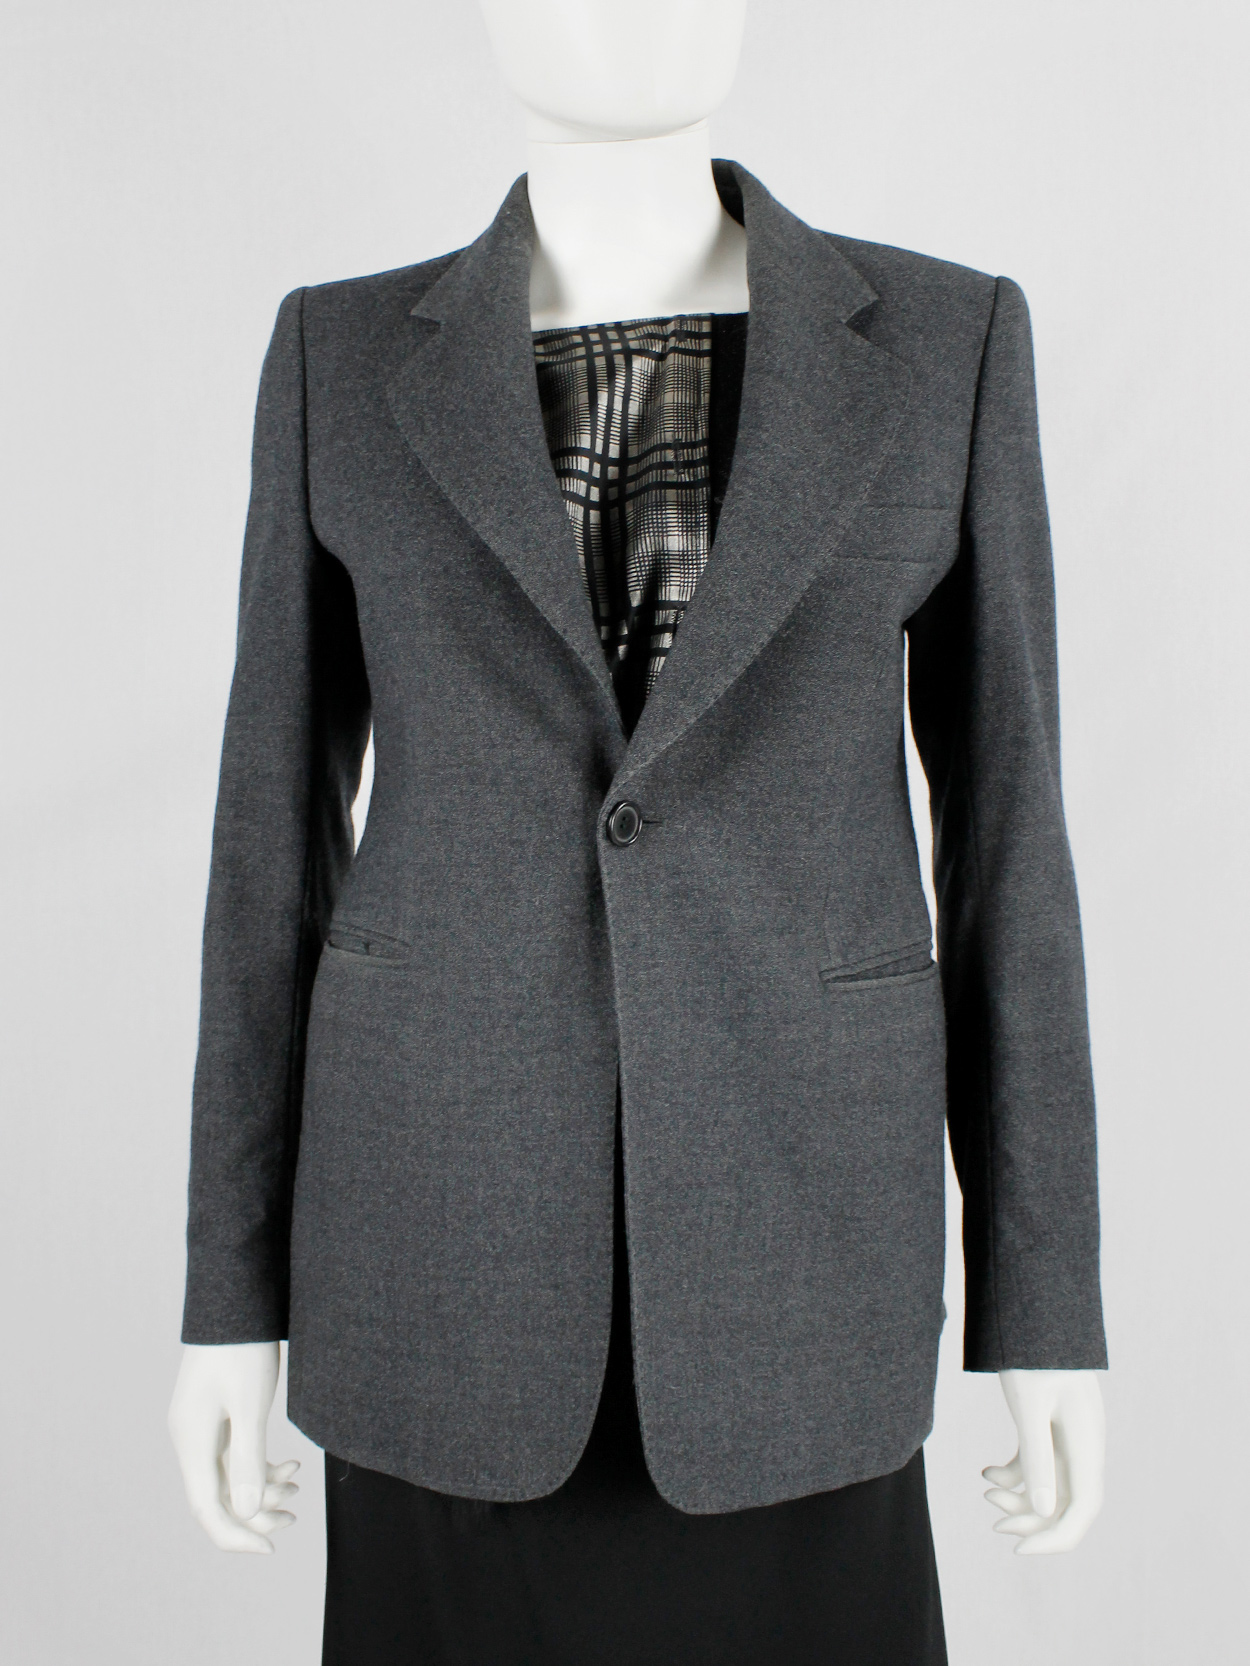 Maison Martin Margiela grey blazer reproduction of a 1974 young